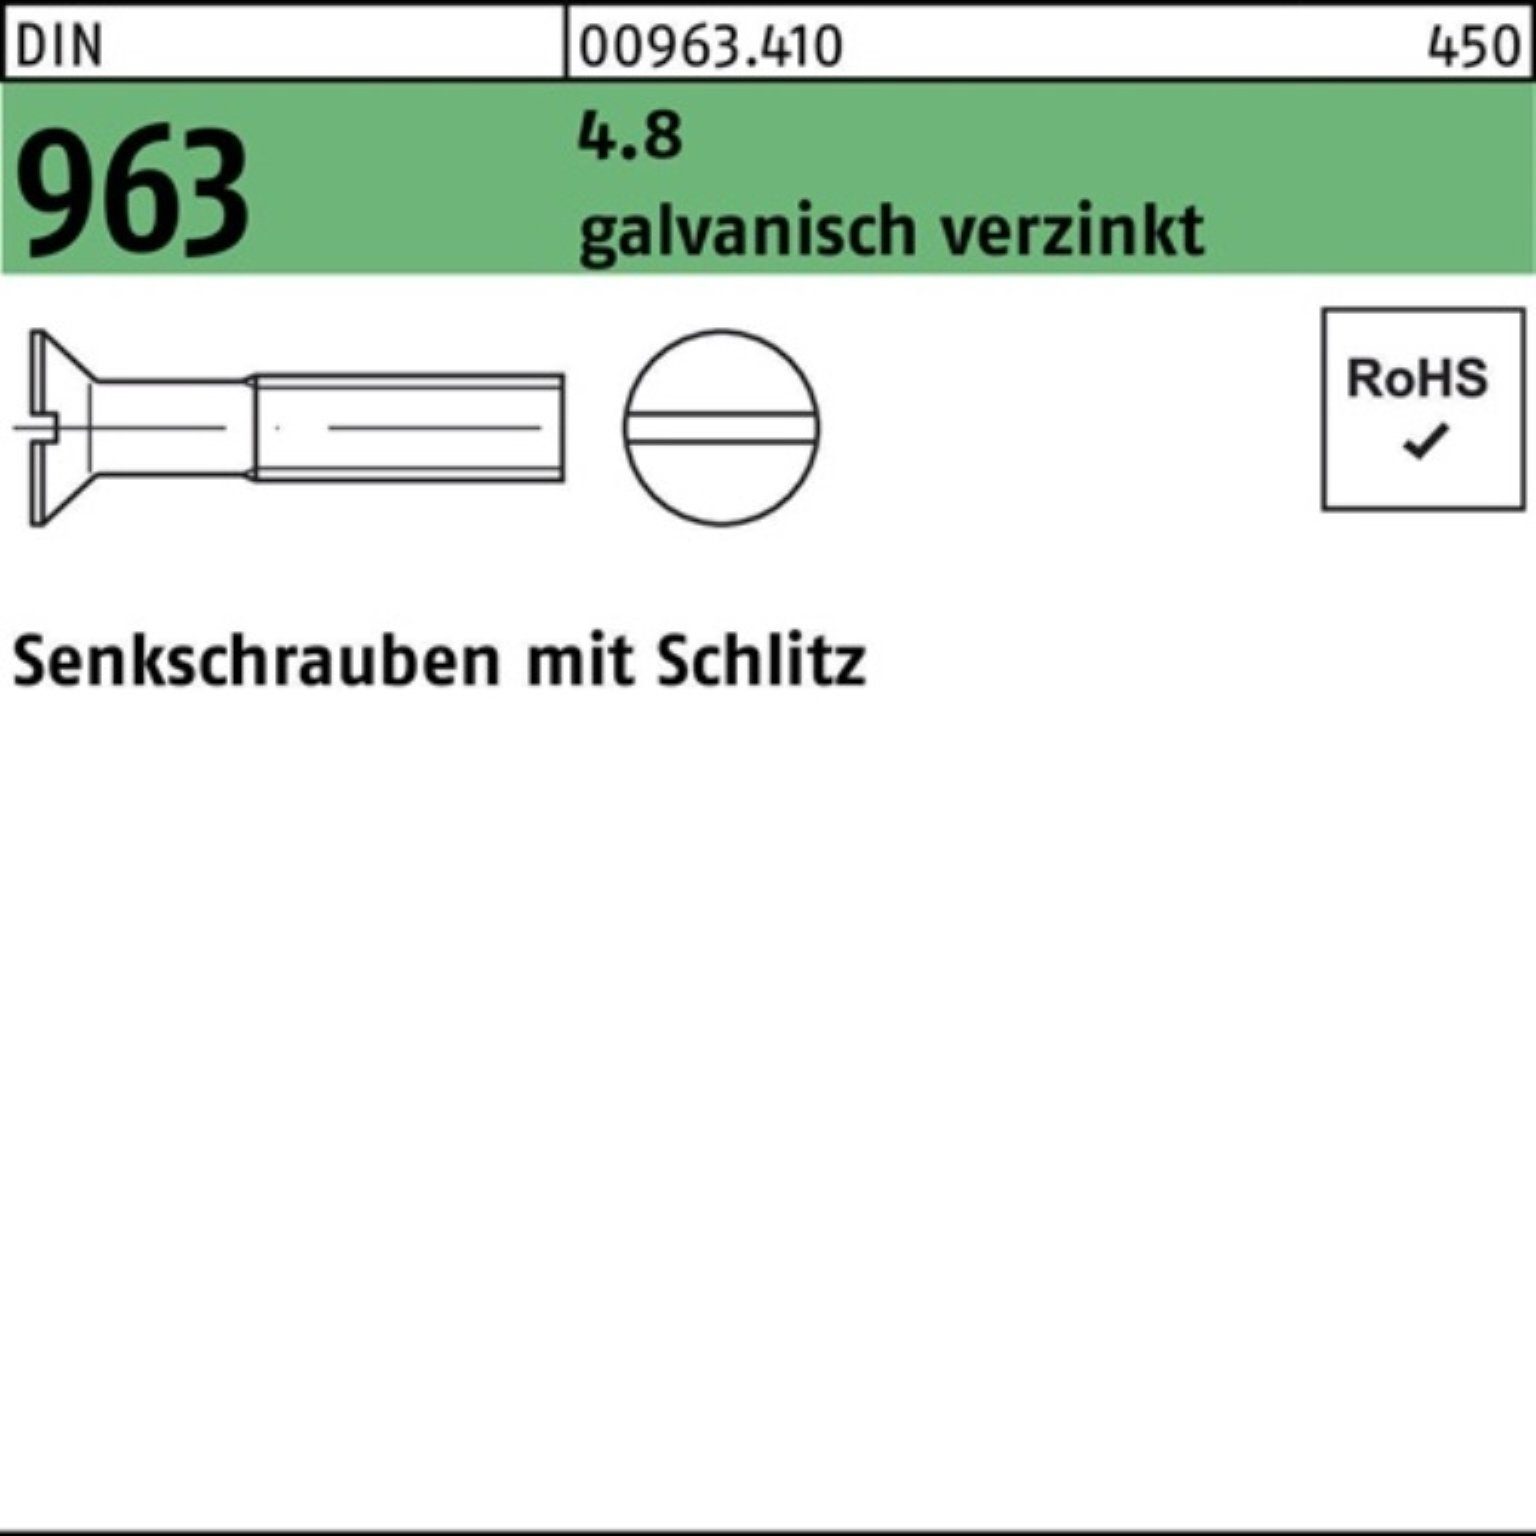 Reyher Senkschraube 100er Pack Senkschraube DIN 963 Schlitz M8x 45 4.8 galv.verz. 100 Stü